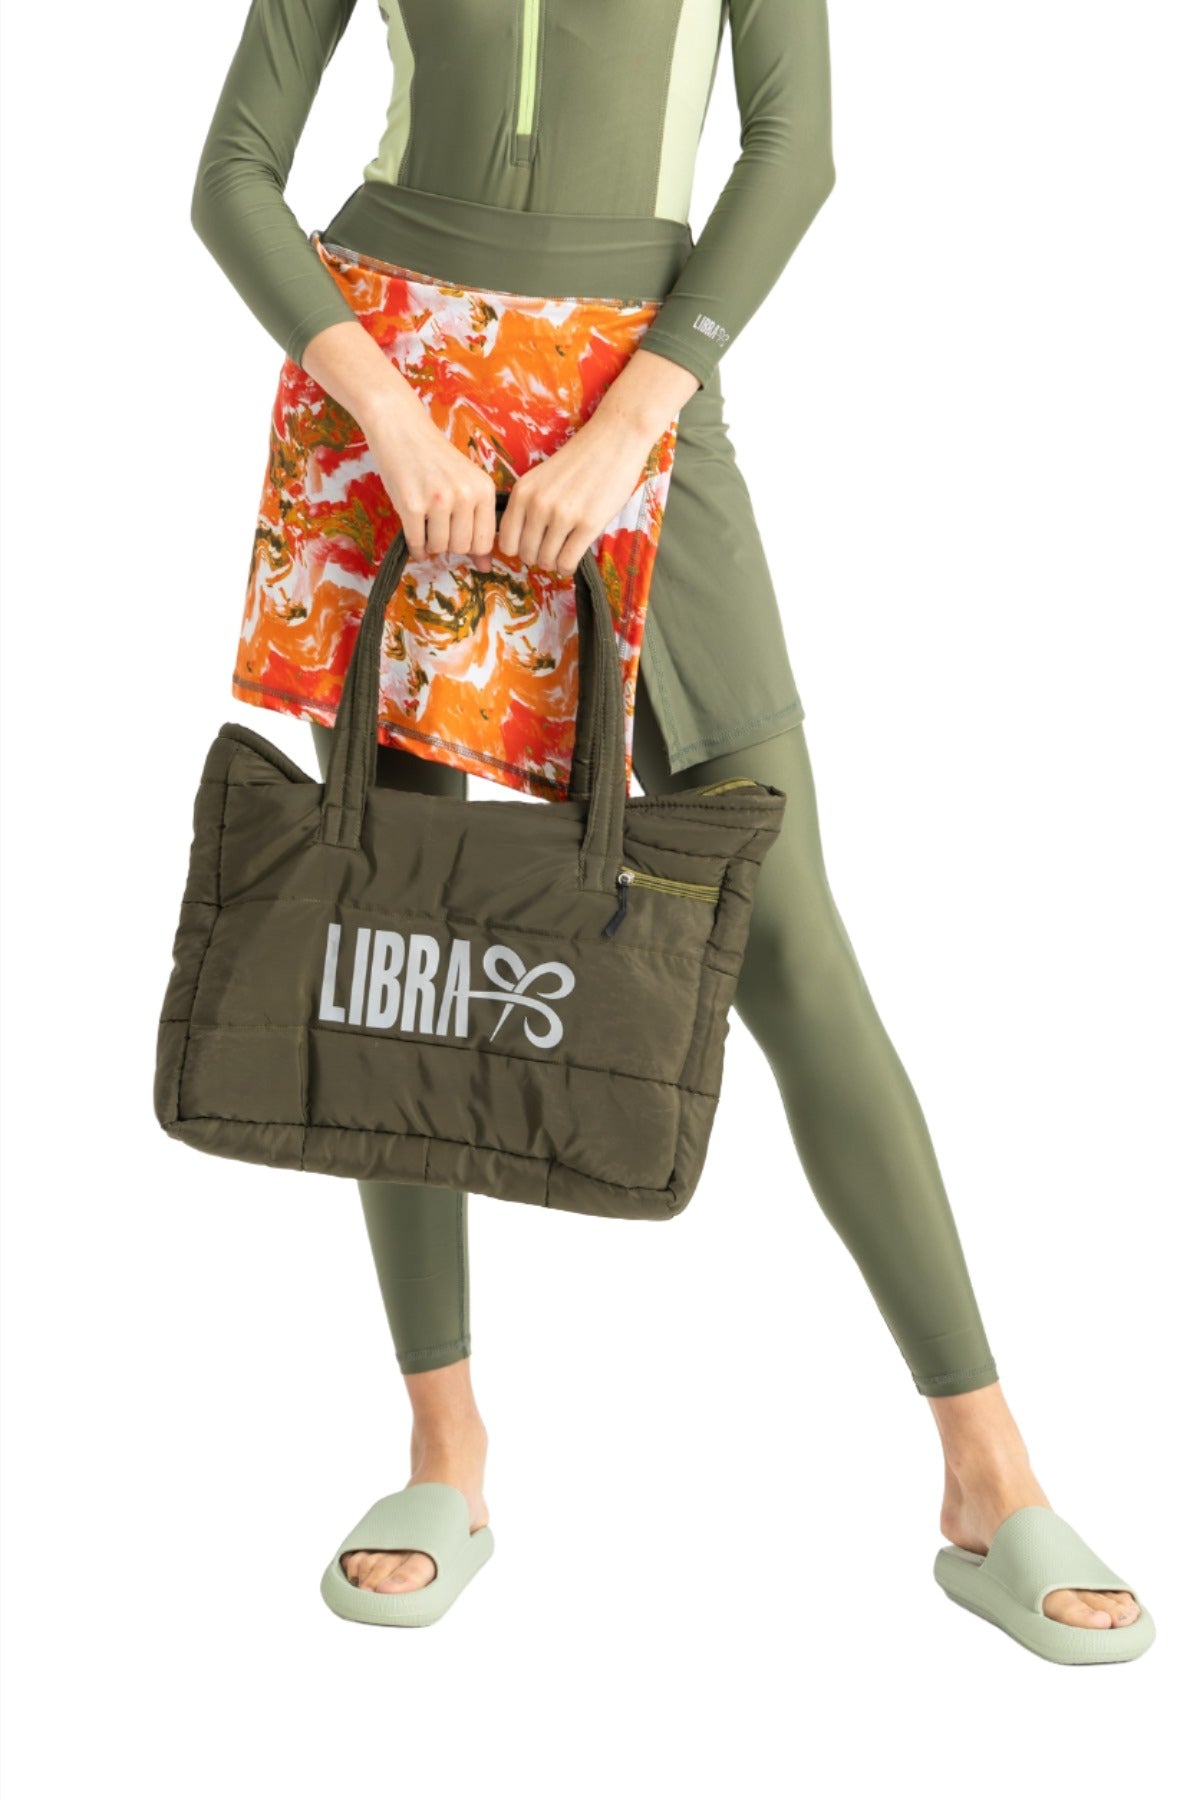 Libra Icon Bag